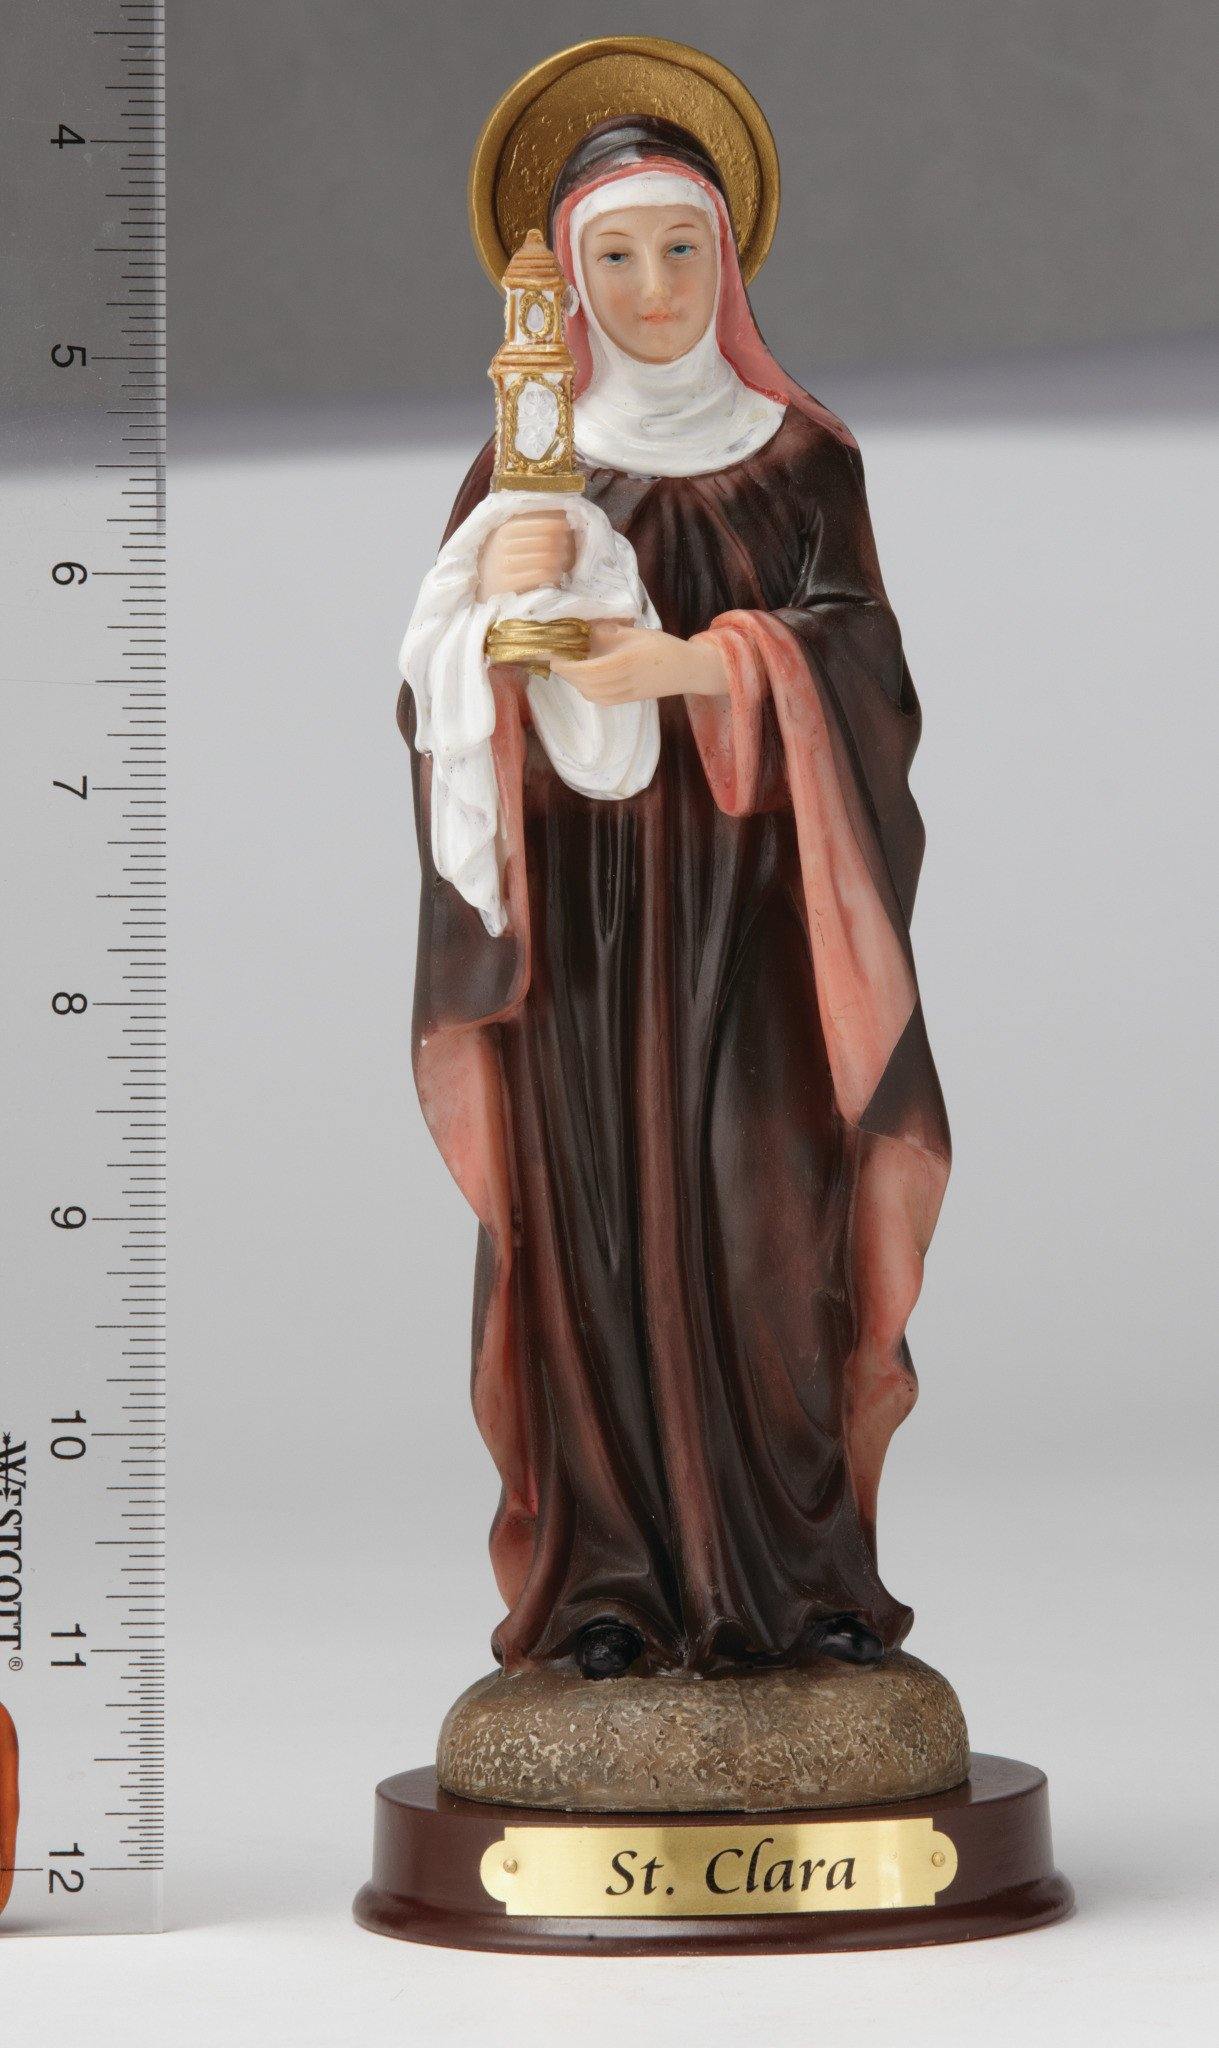 8" Saint Clara Statue - Hand Painted - Religious Art - Chiarelli's Religious Goods & Church Supply